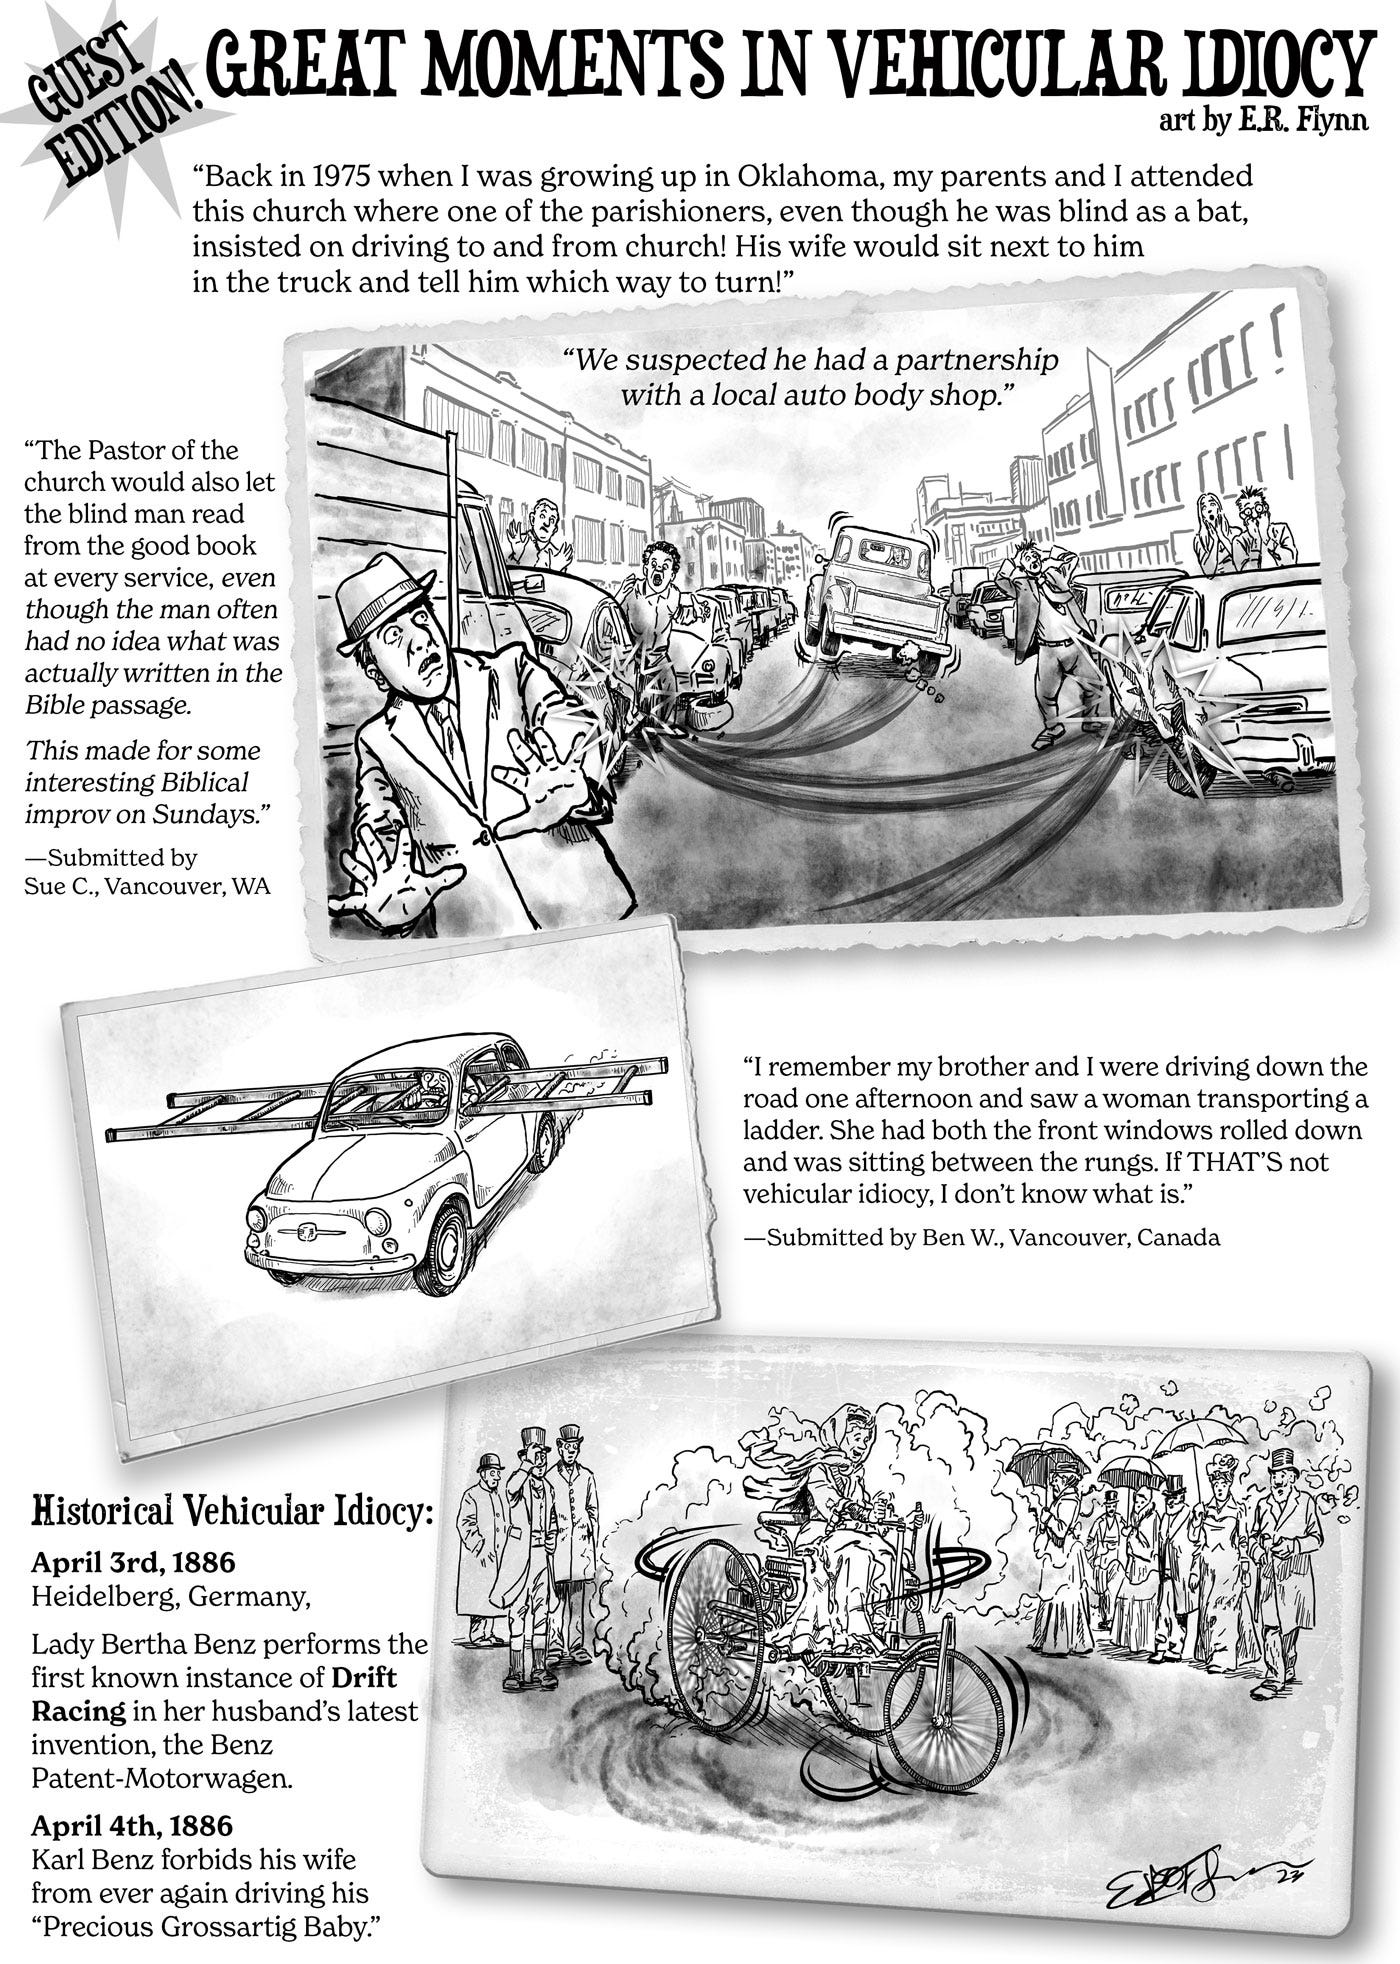 Guest edition Vehicular Idiocy Comic by ER Flynn